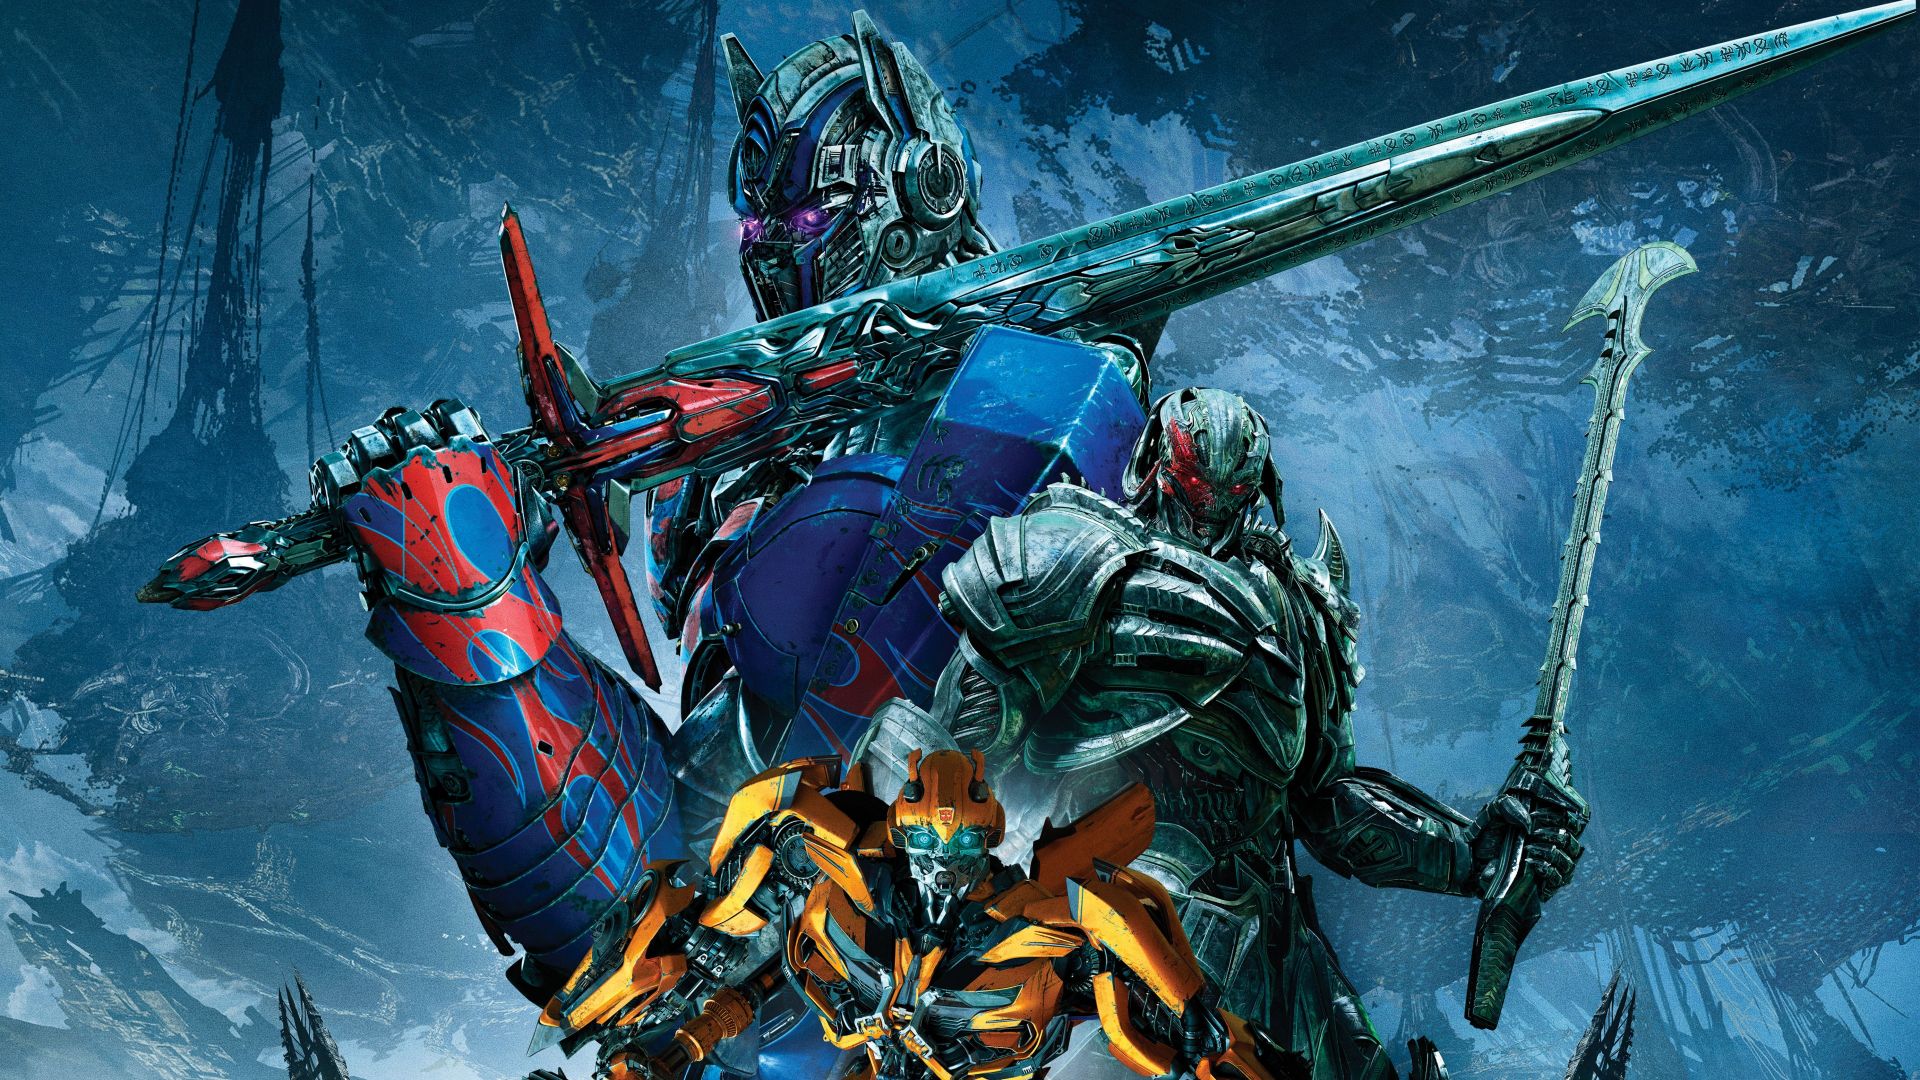 Трансформеры: Последний рыцарь, Transformers: The Last Knight, Transformers 5, 4k (horizontal)